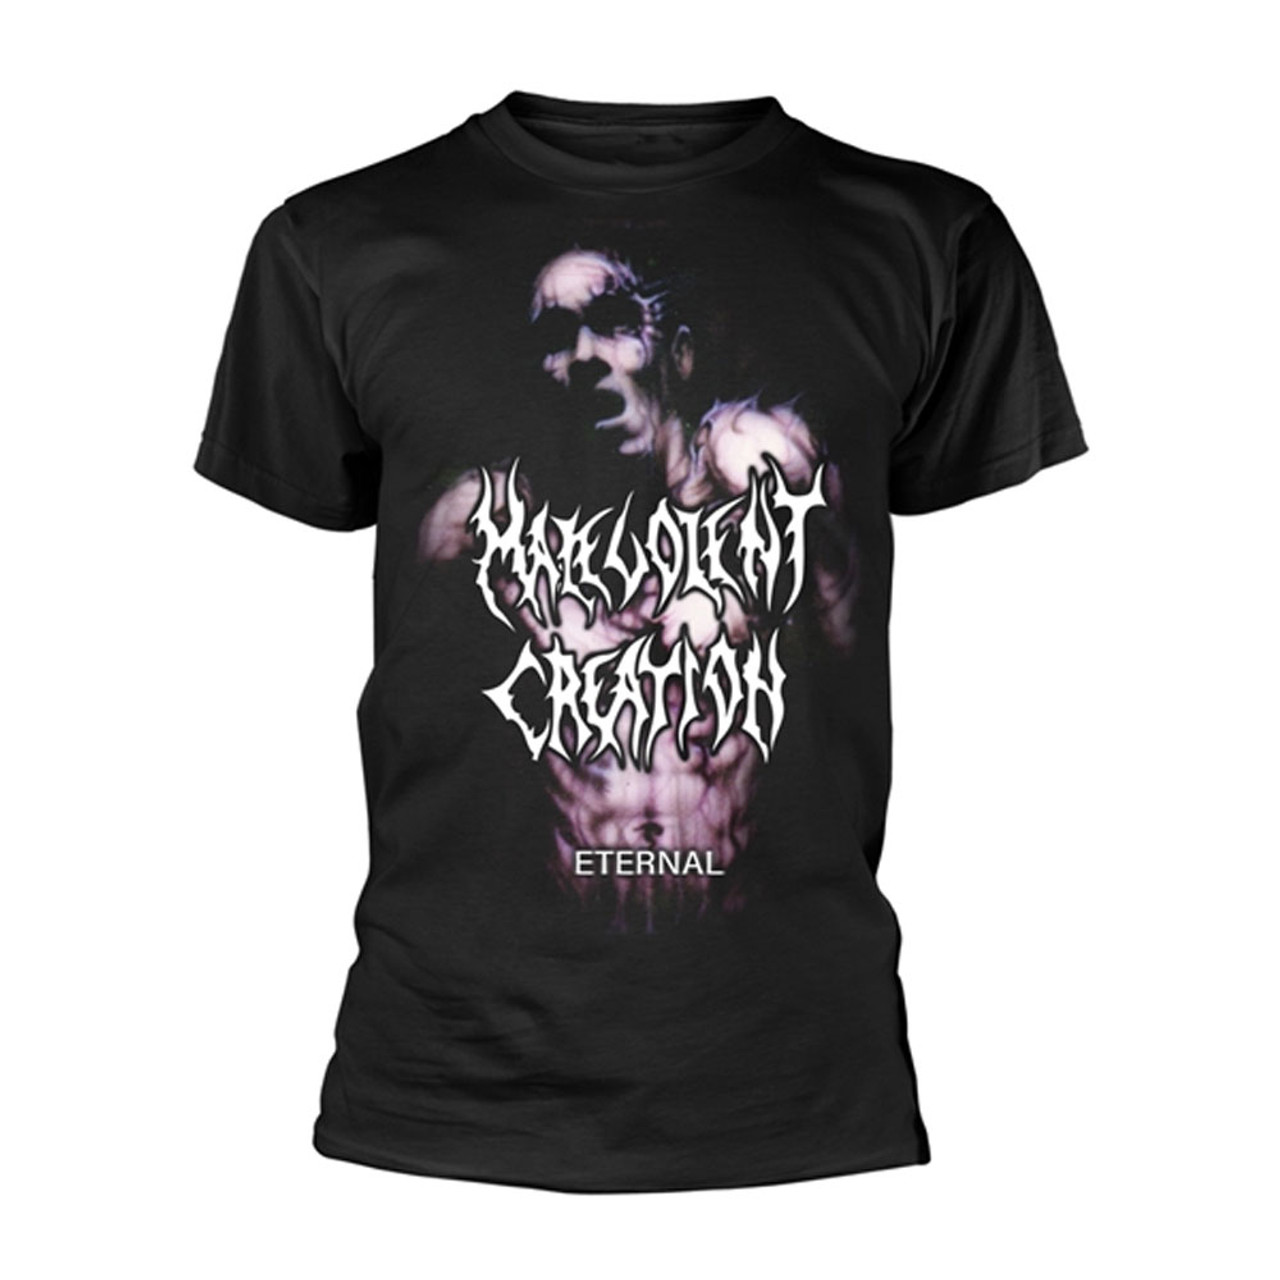 Malevolent Creation 'Eternal' (Black) T-Shirt